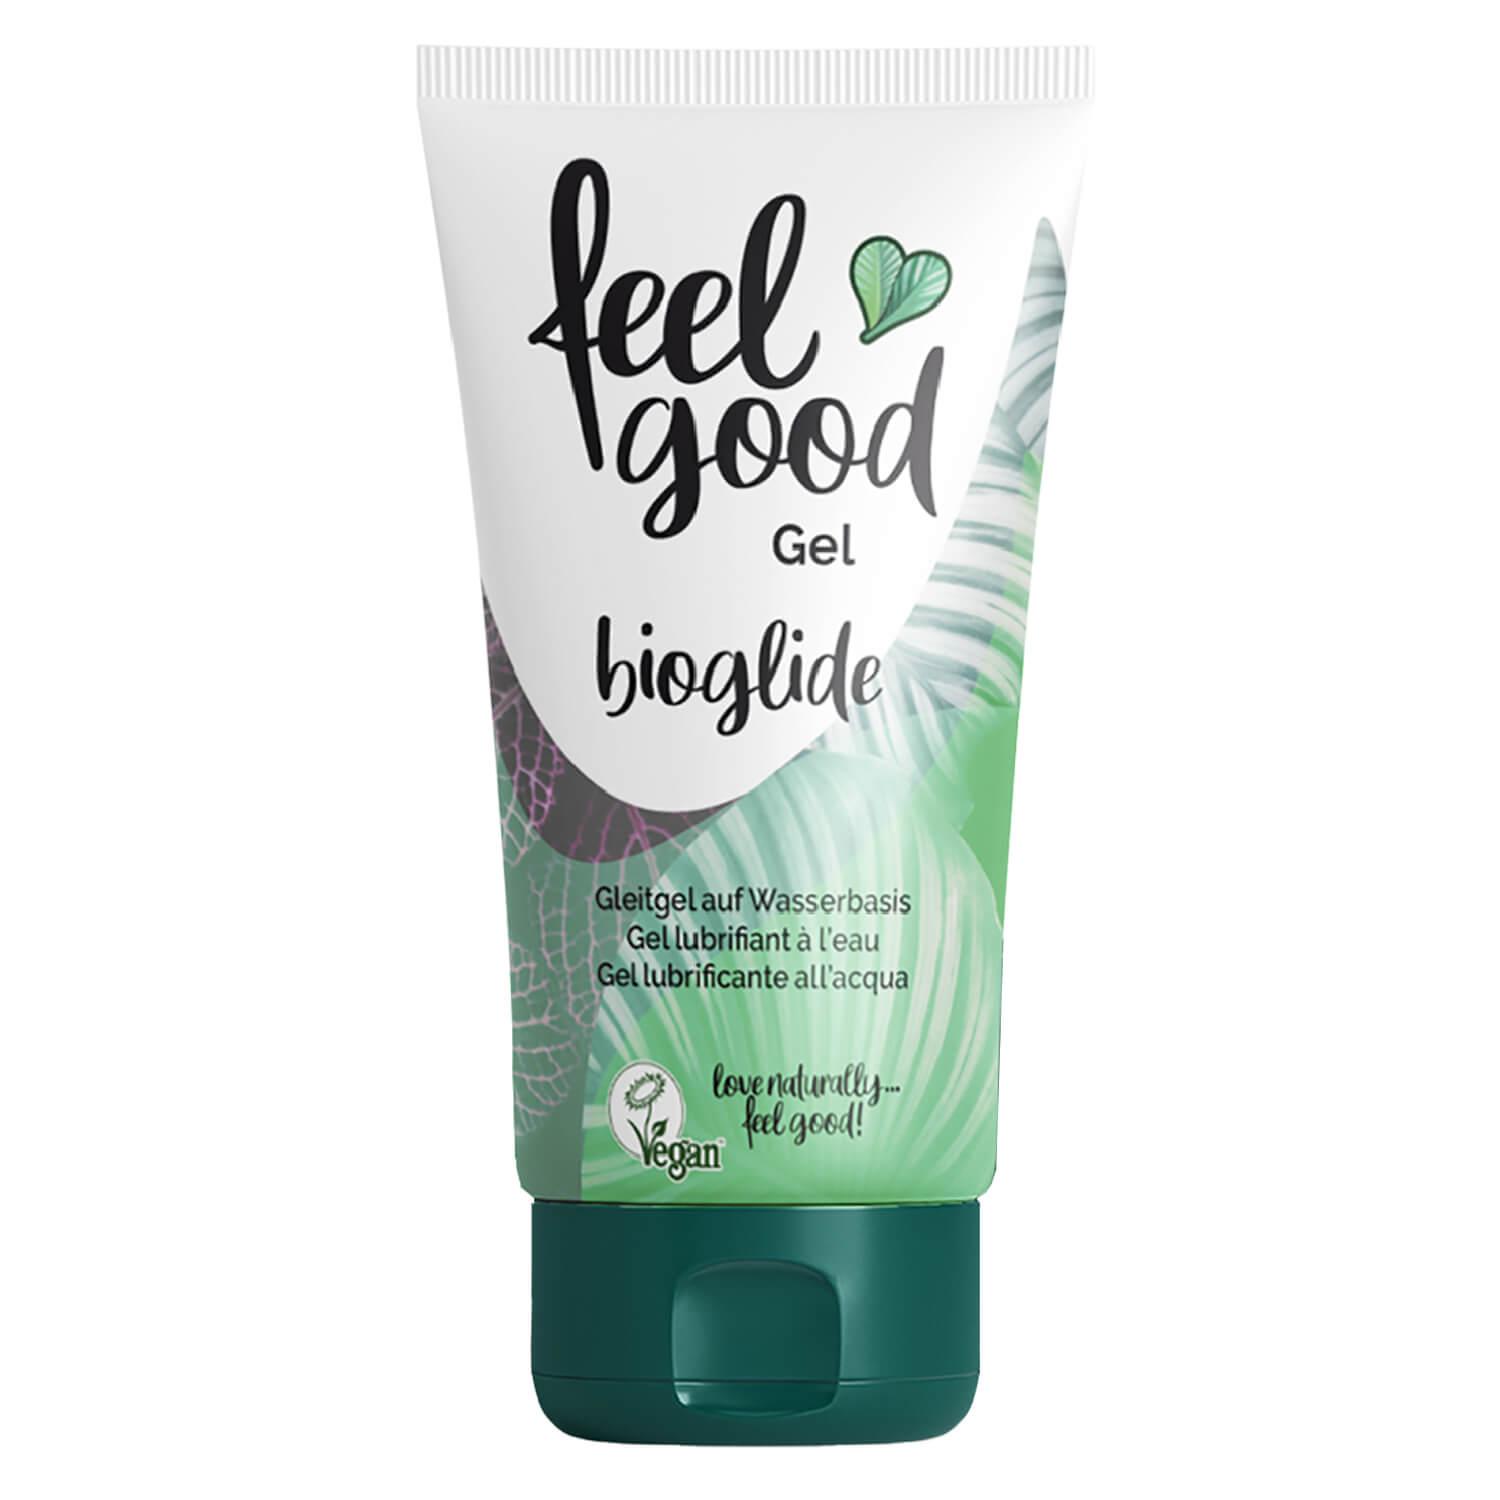 feelgood condoms - Lubricant bioglide